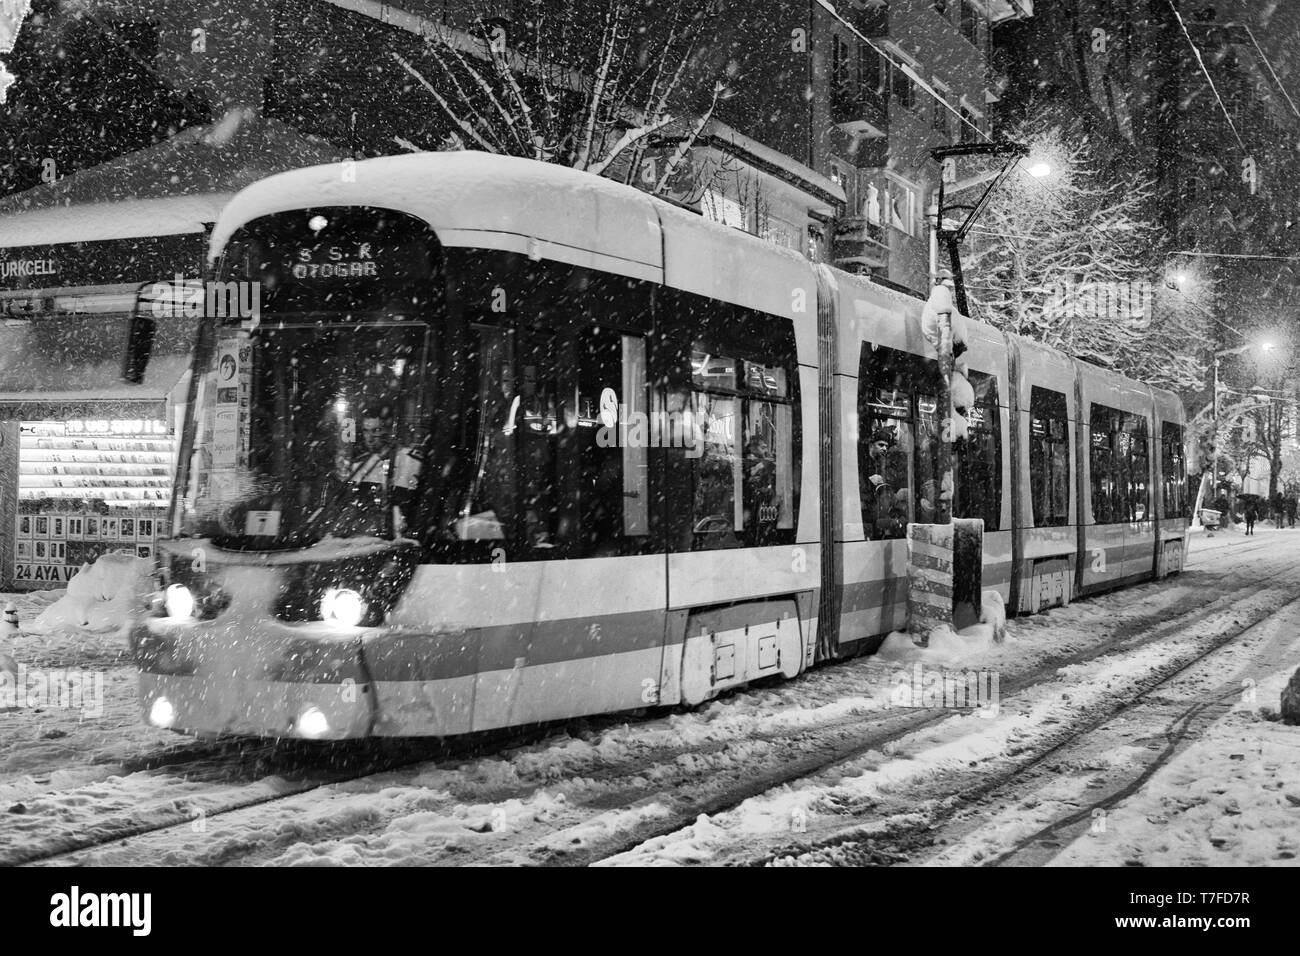 30 December 2014, Eskisehir, Turkey Snow scenes from the Eskisehir Turkey in a snowy night Stock Photo